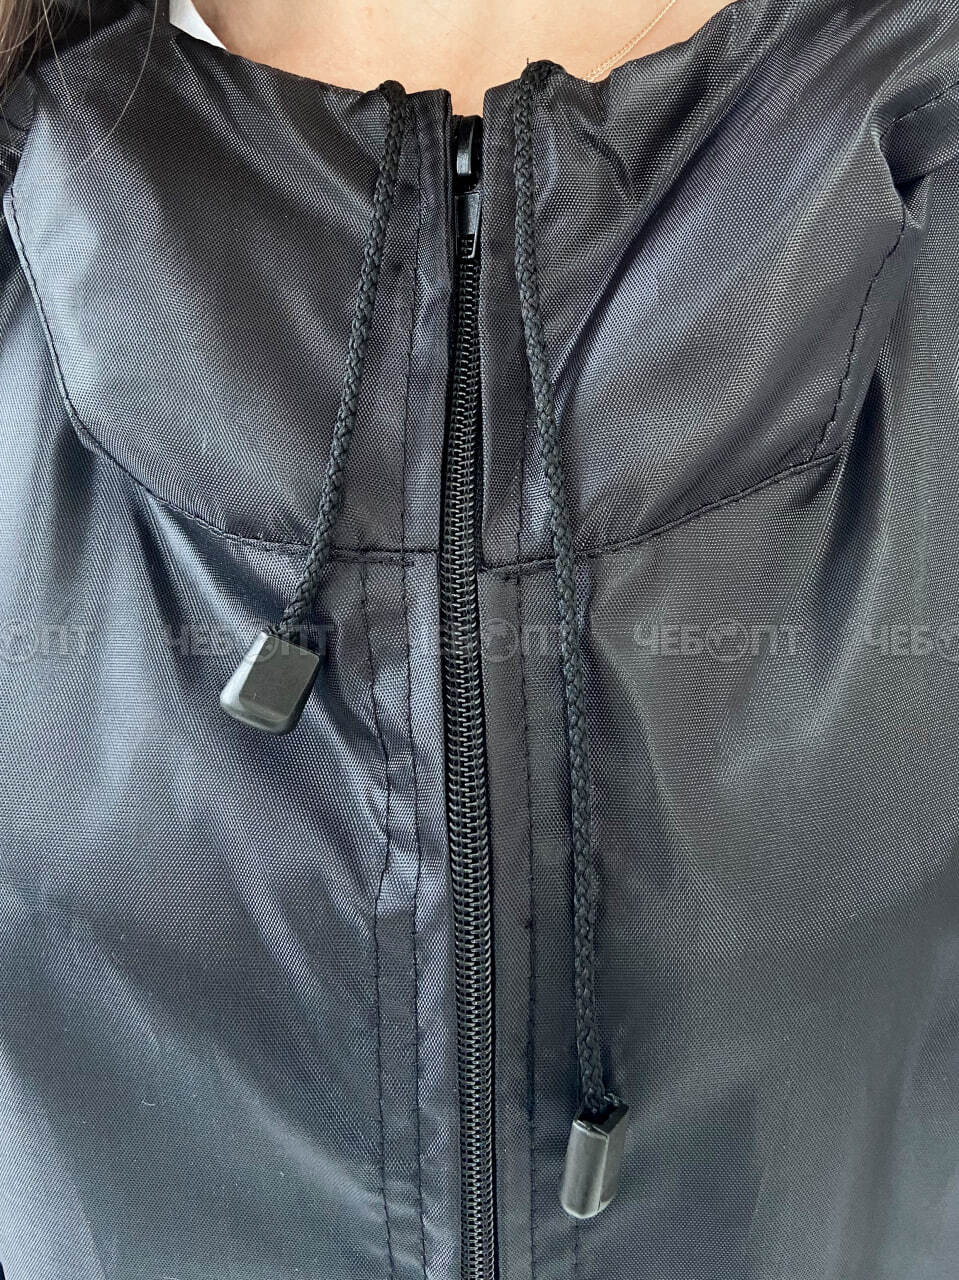 Костюм-дождевик (куртка, брюки),ЧЕБПРО,размер 44-46,100% полиэстер, Арт. ДожКостМуж/черный, МПС [15] СобПр. ЧЕБОПТ.